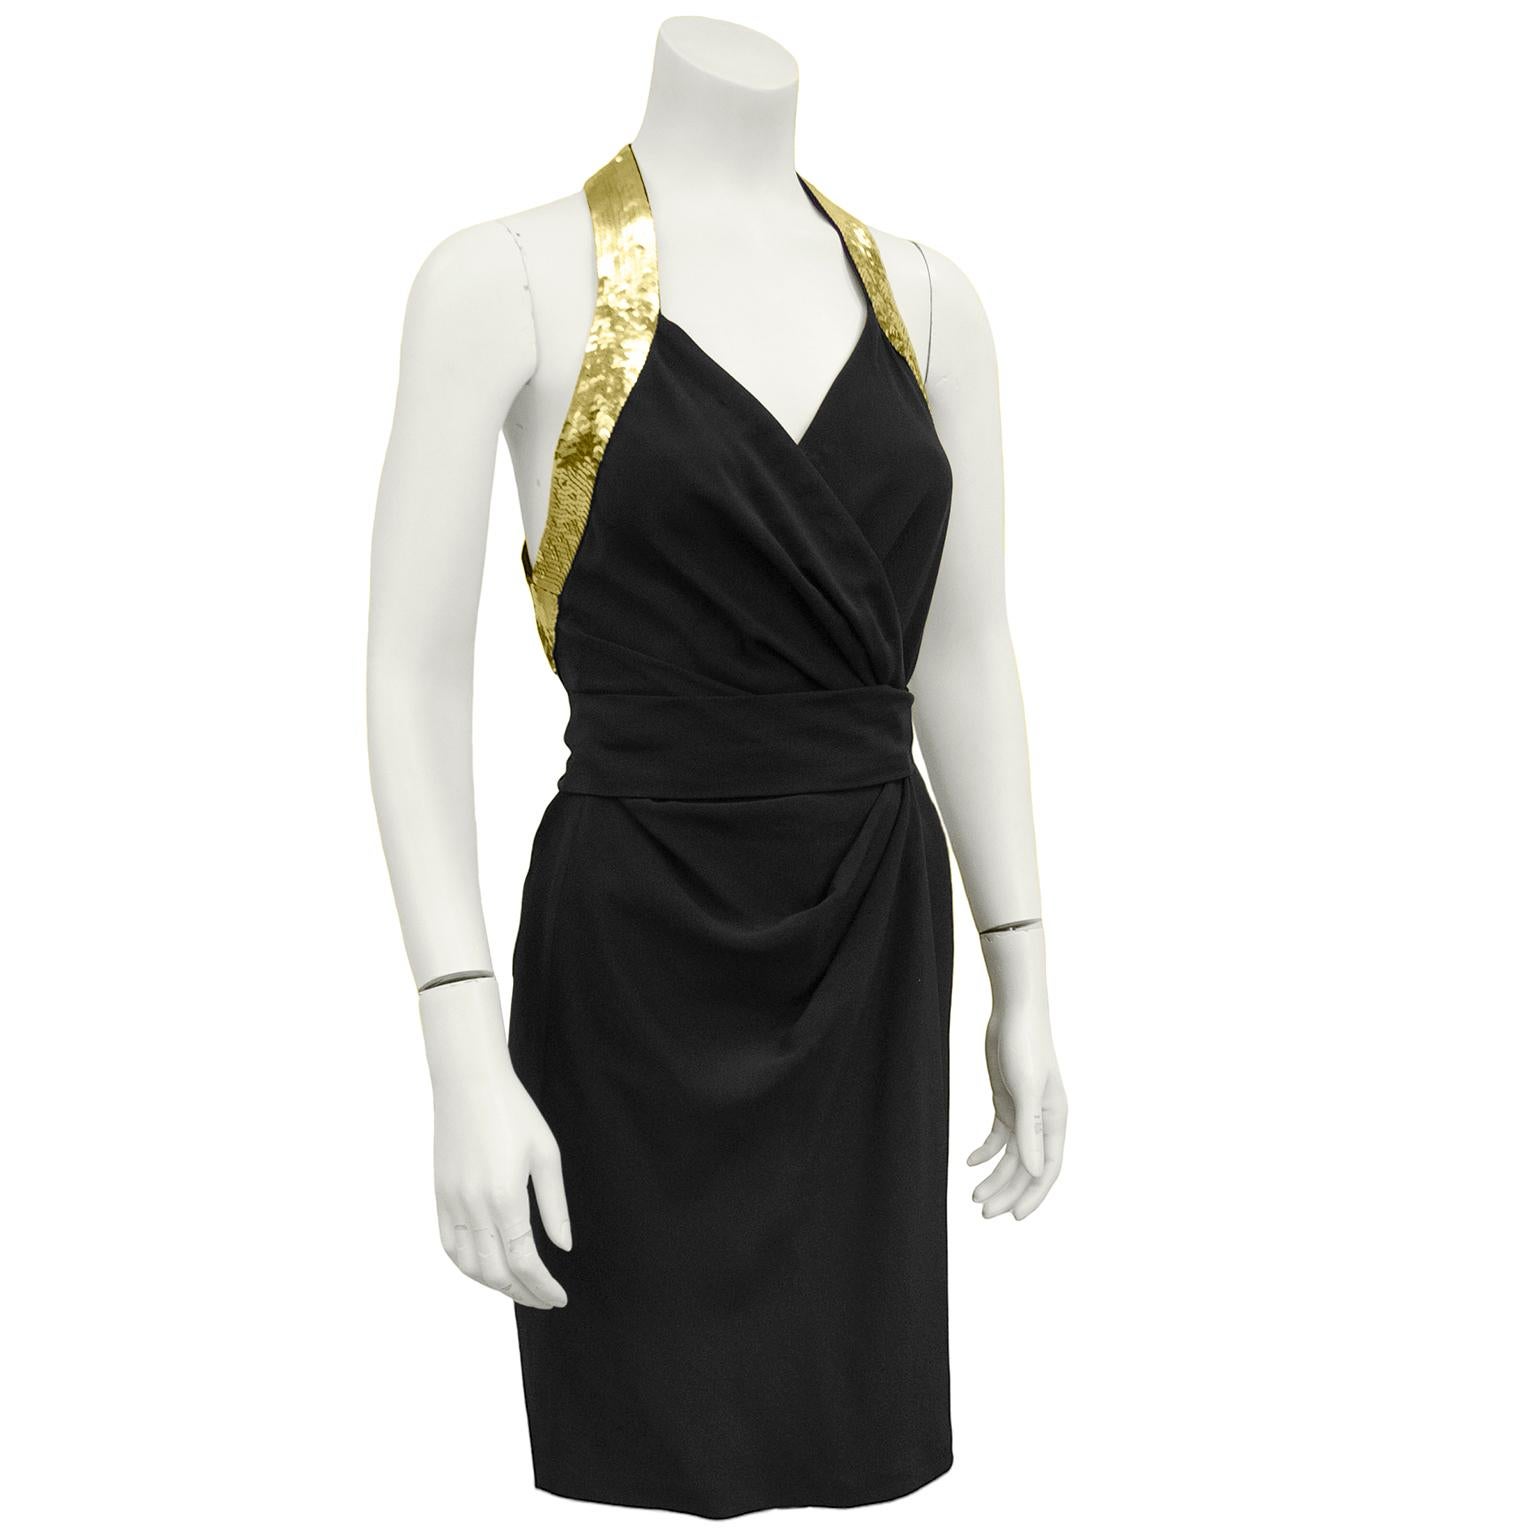 black dress with gold trim